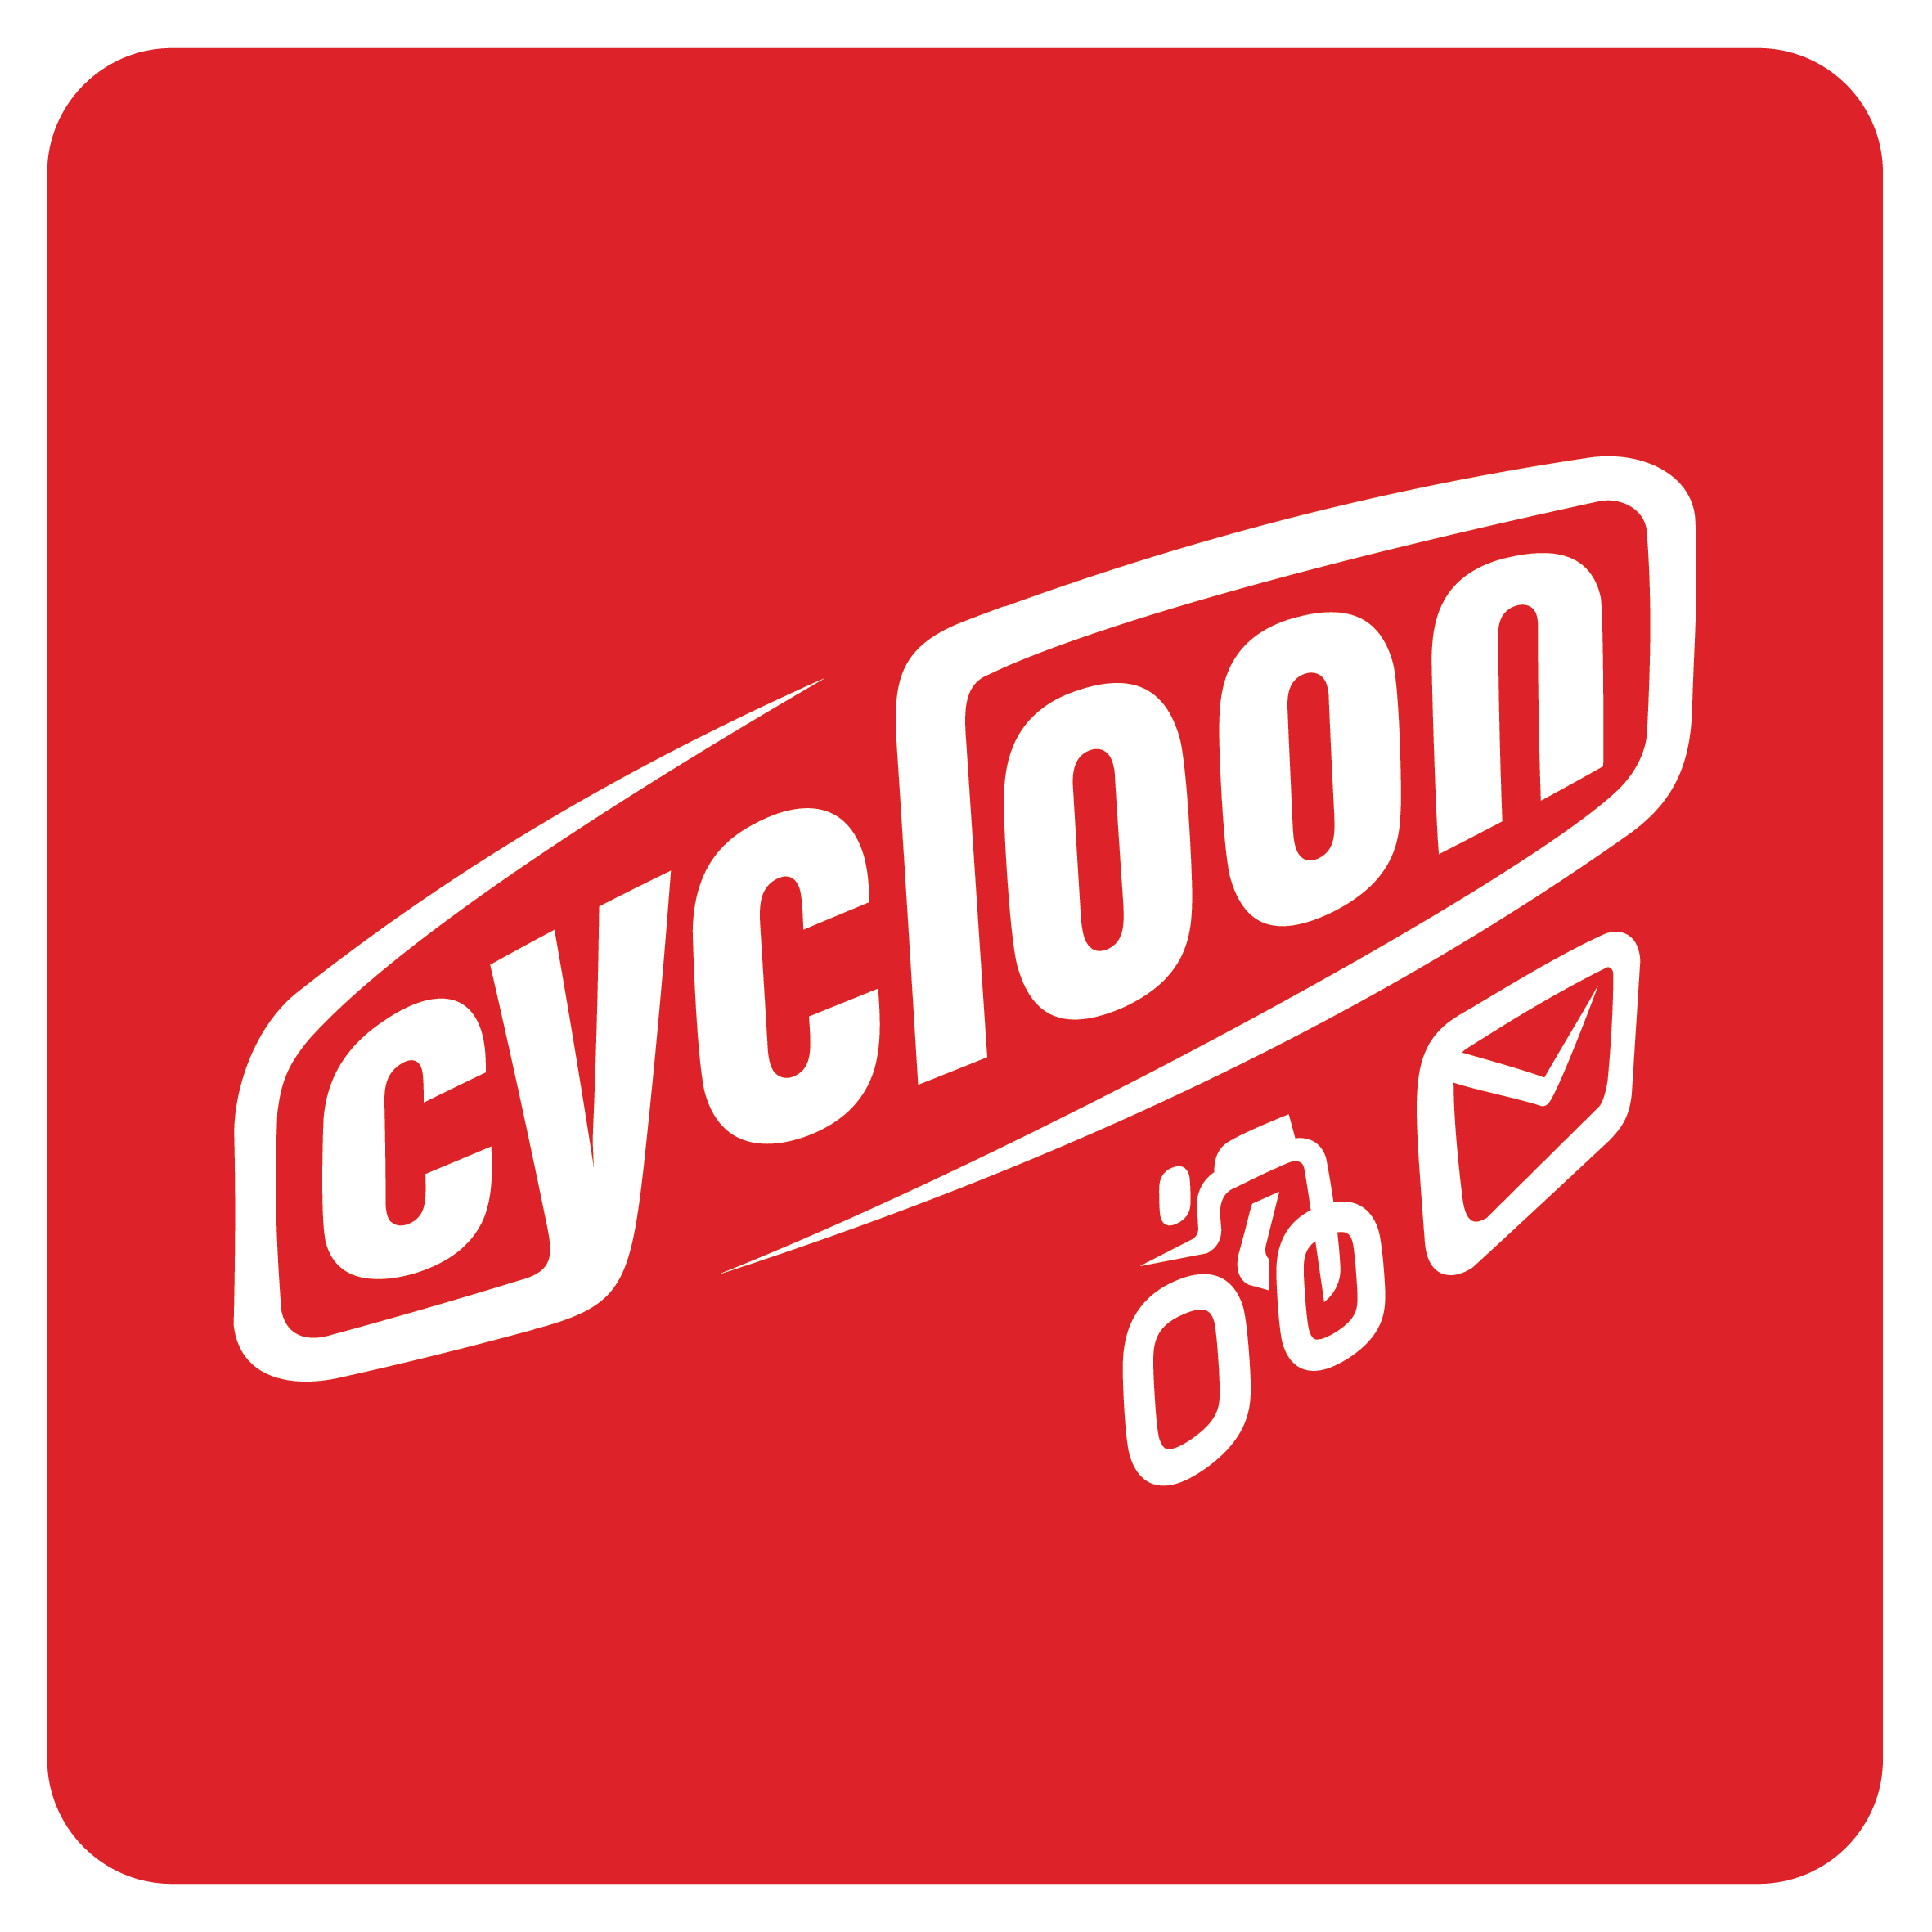 Cycloon fietskoeriers